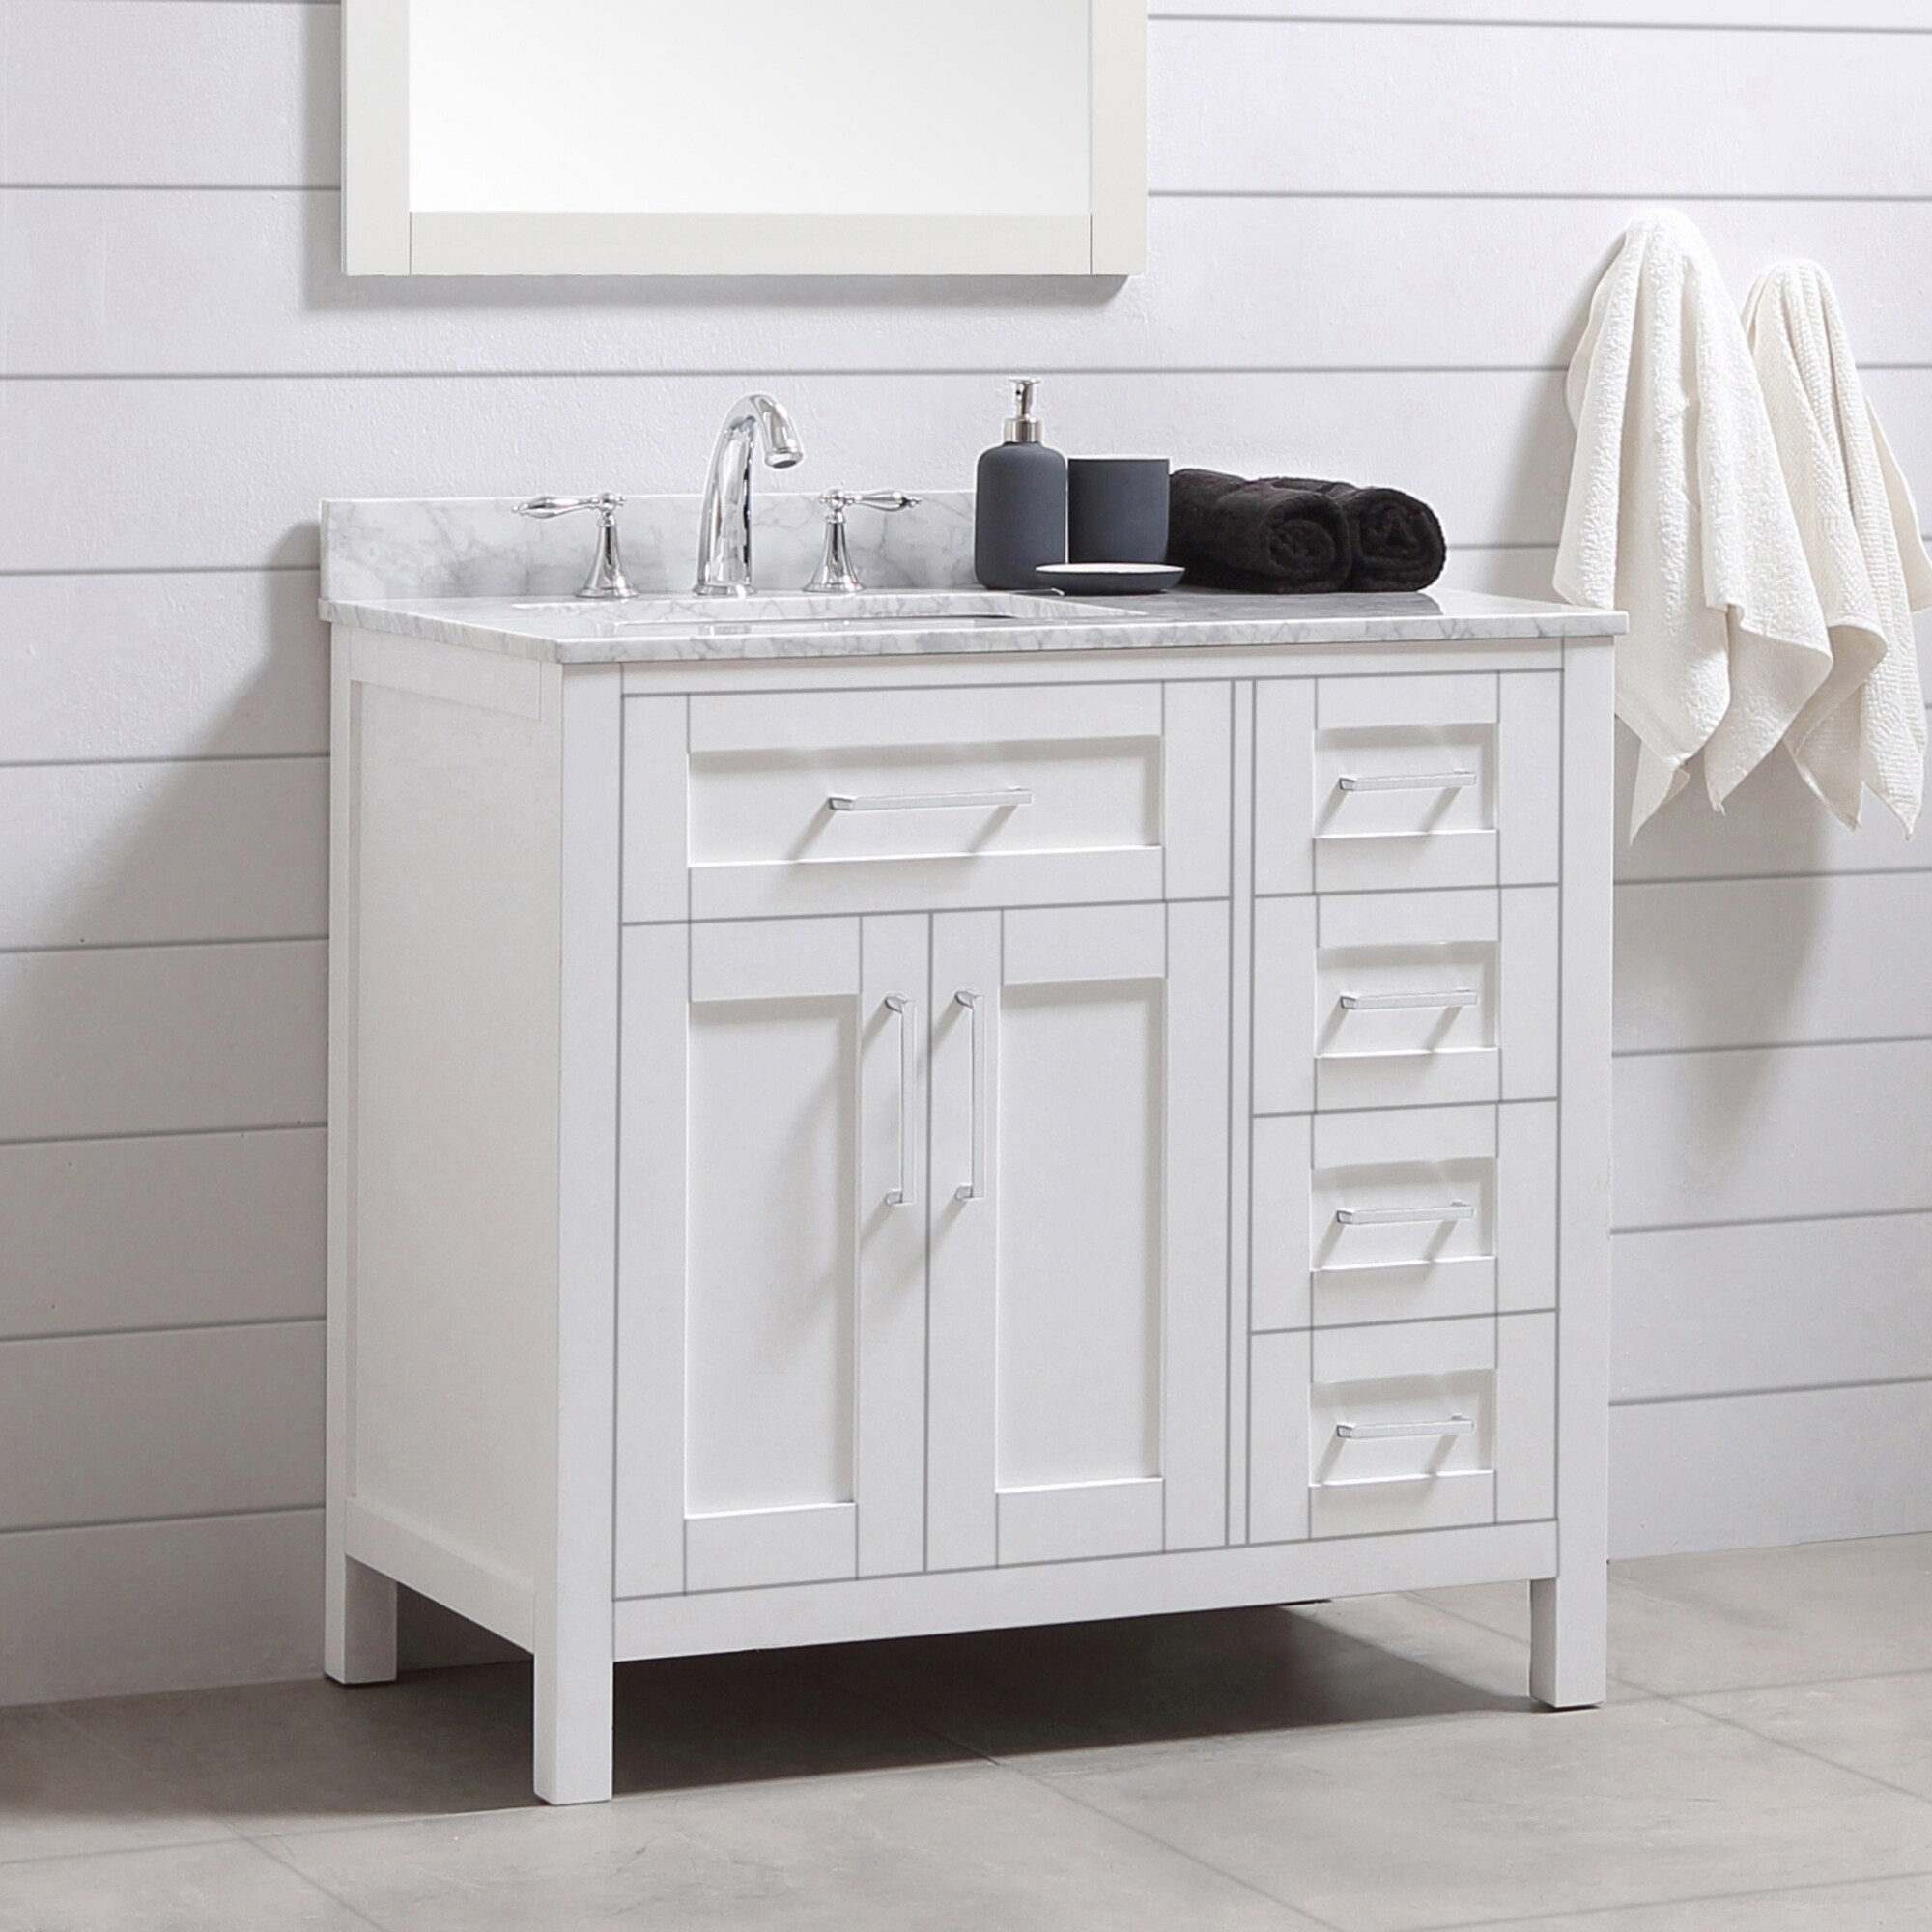 OVE Decors Tahoe 36-in White Undermount Single Sink Bathroom Vanity ...